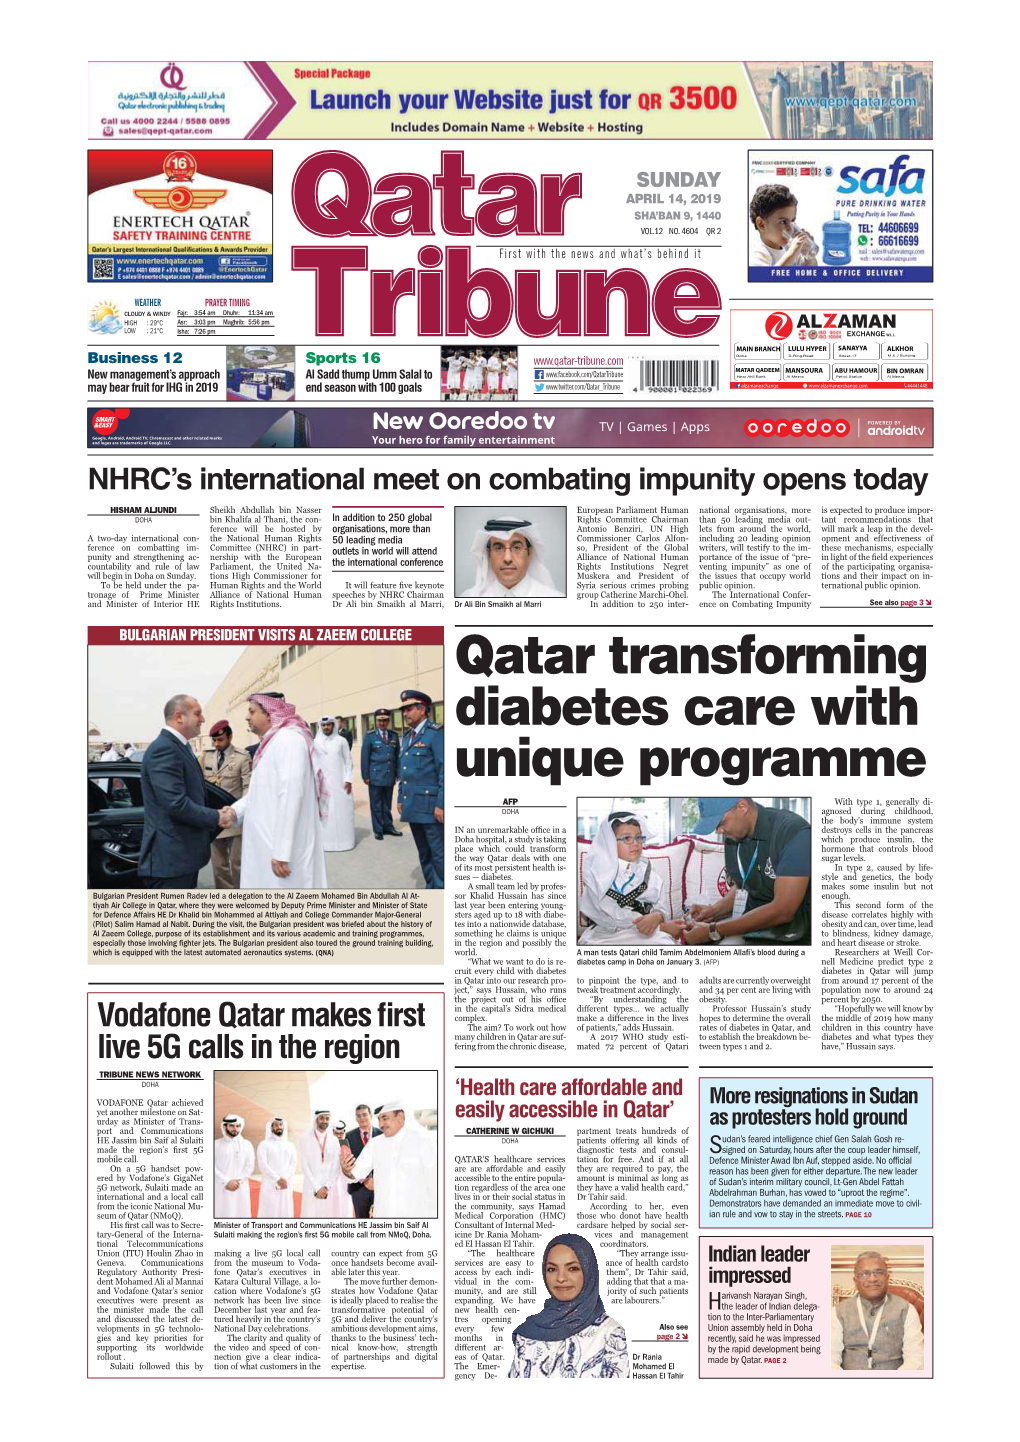 Qatar Transforming Diabetes Care with Unique Programme